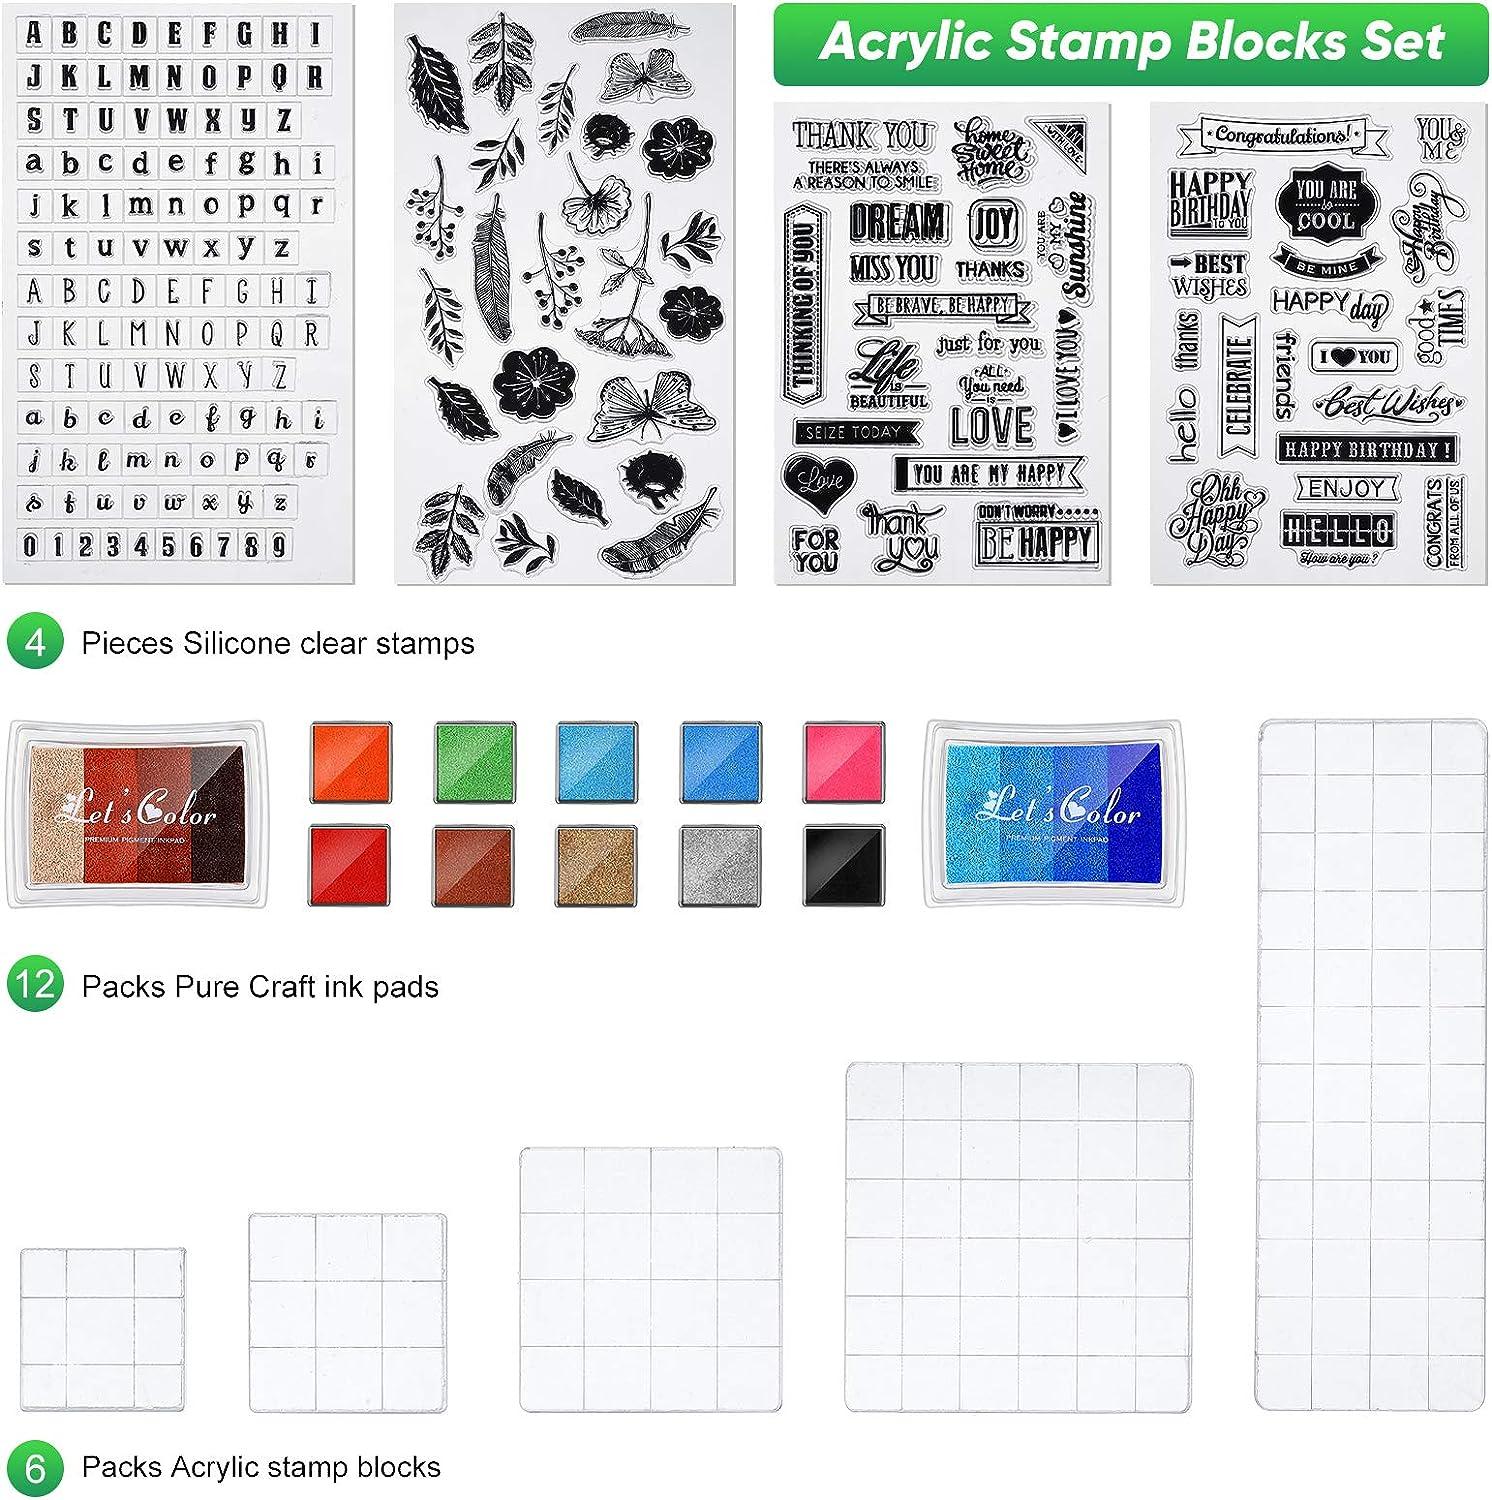 22 Pieces Acrylic Stamp Blocks Tools Set Include 6 Stamp Blocks